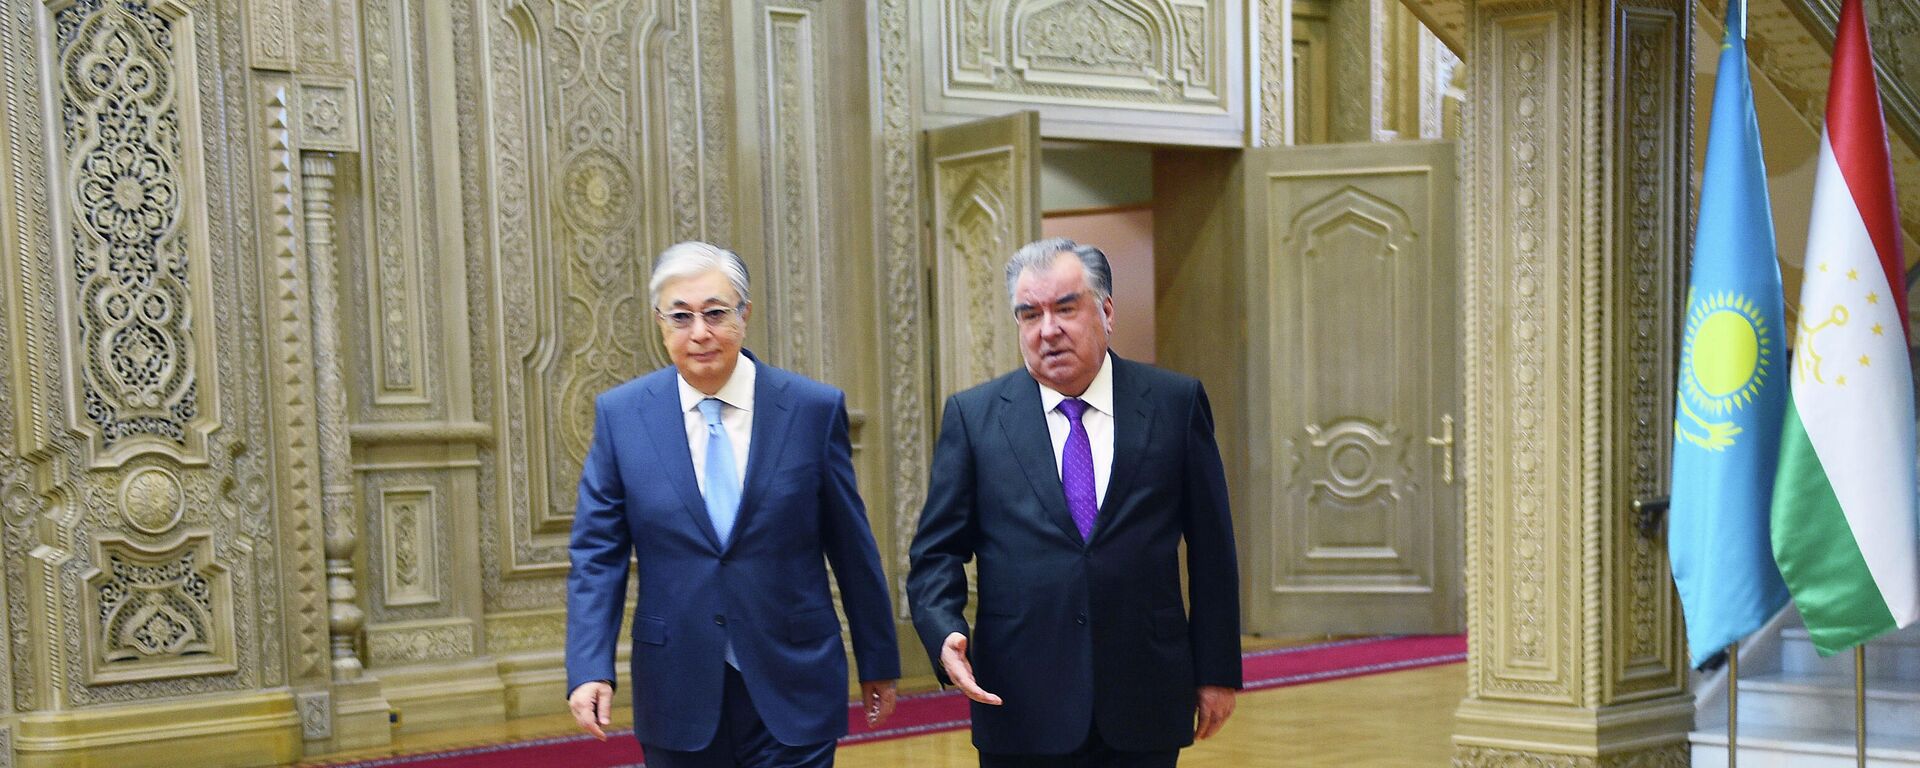 Президент Касым-Жомарт Токаев и Президент Таджикистана Эмомали Рахмон - Sputnik Таджикистан, 1920, 20.05.2021